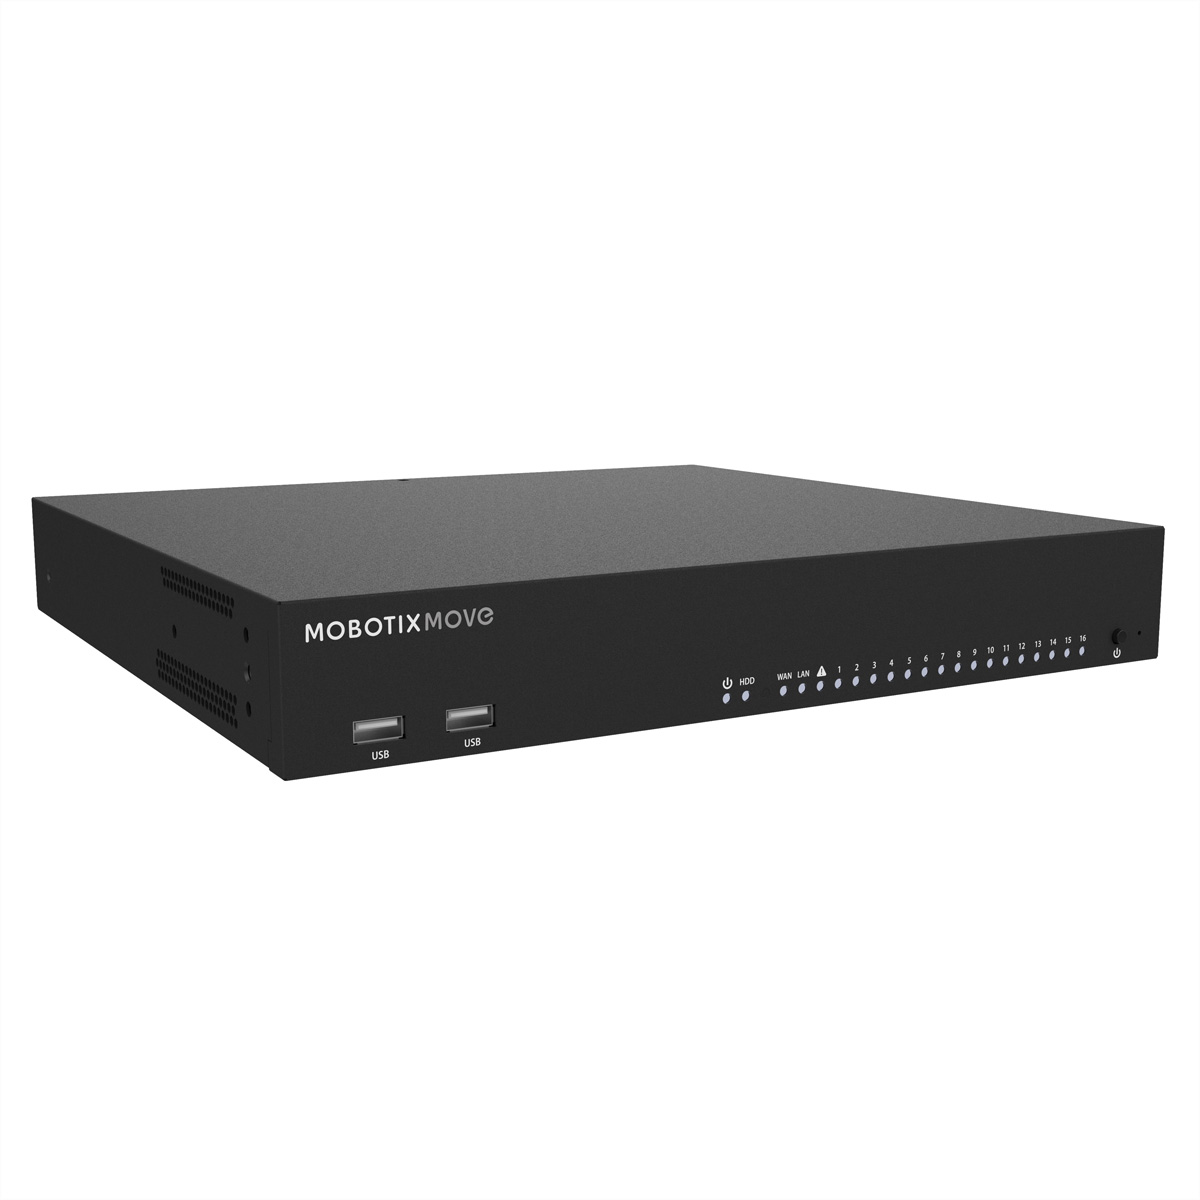 MOBOTIX MOVE NVR Netzwerk-Videorekorder 16 Kanäle